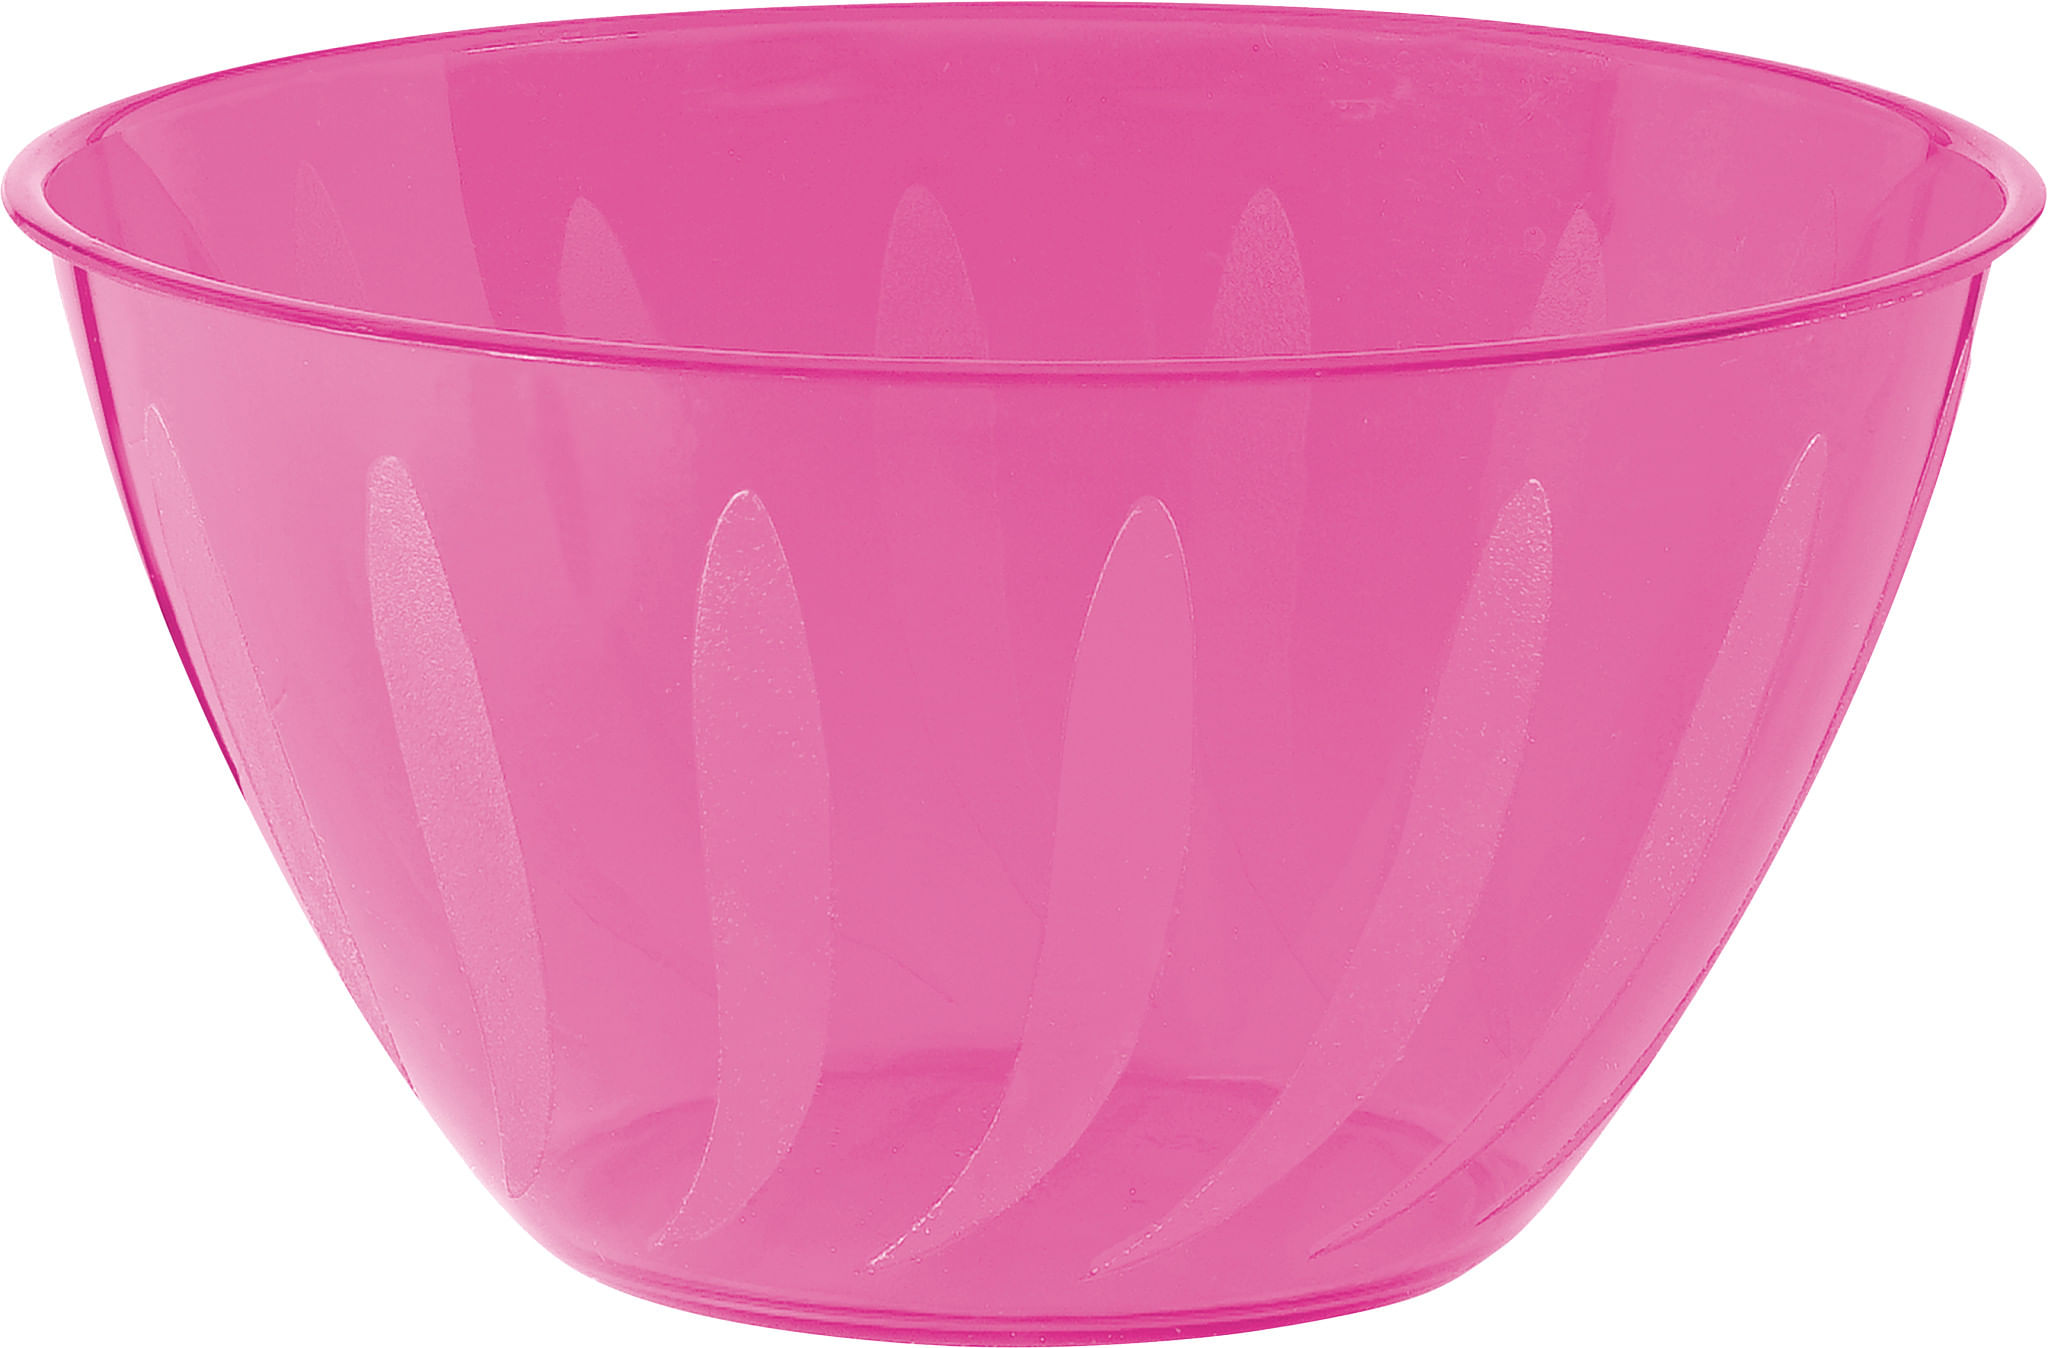 Cazoleta disc bowl rosa